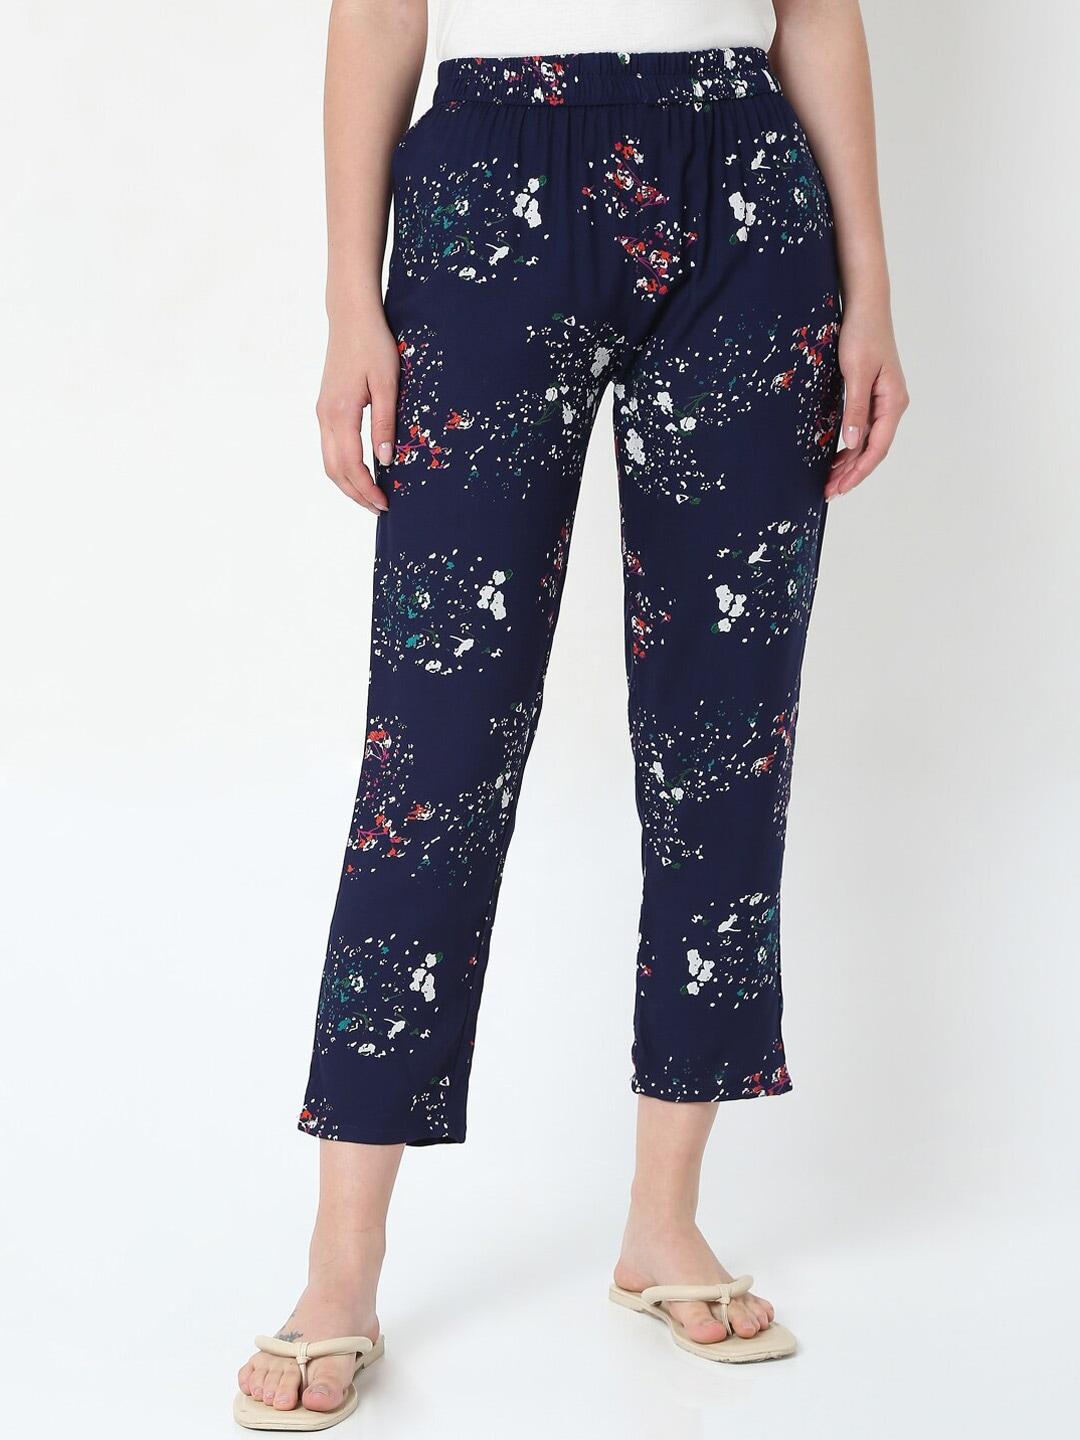 smarty pants women blue & white floral printed pyjamas